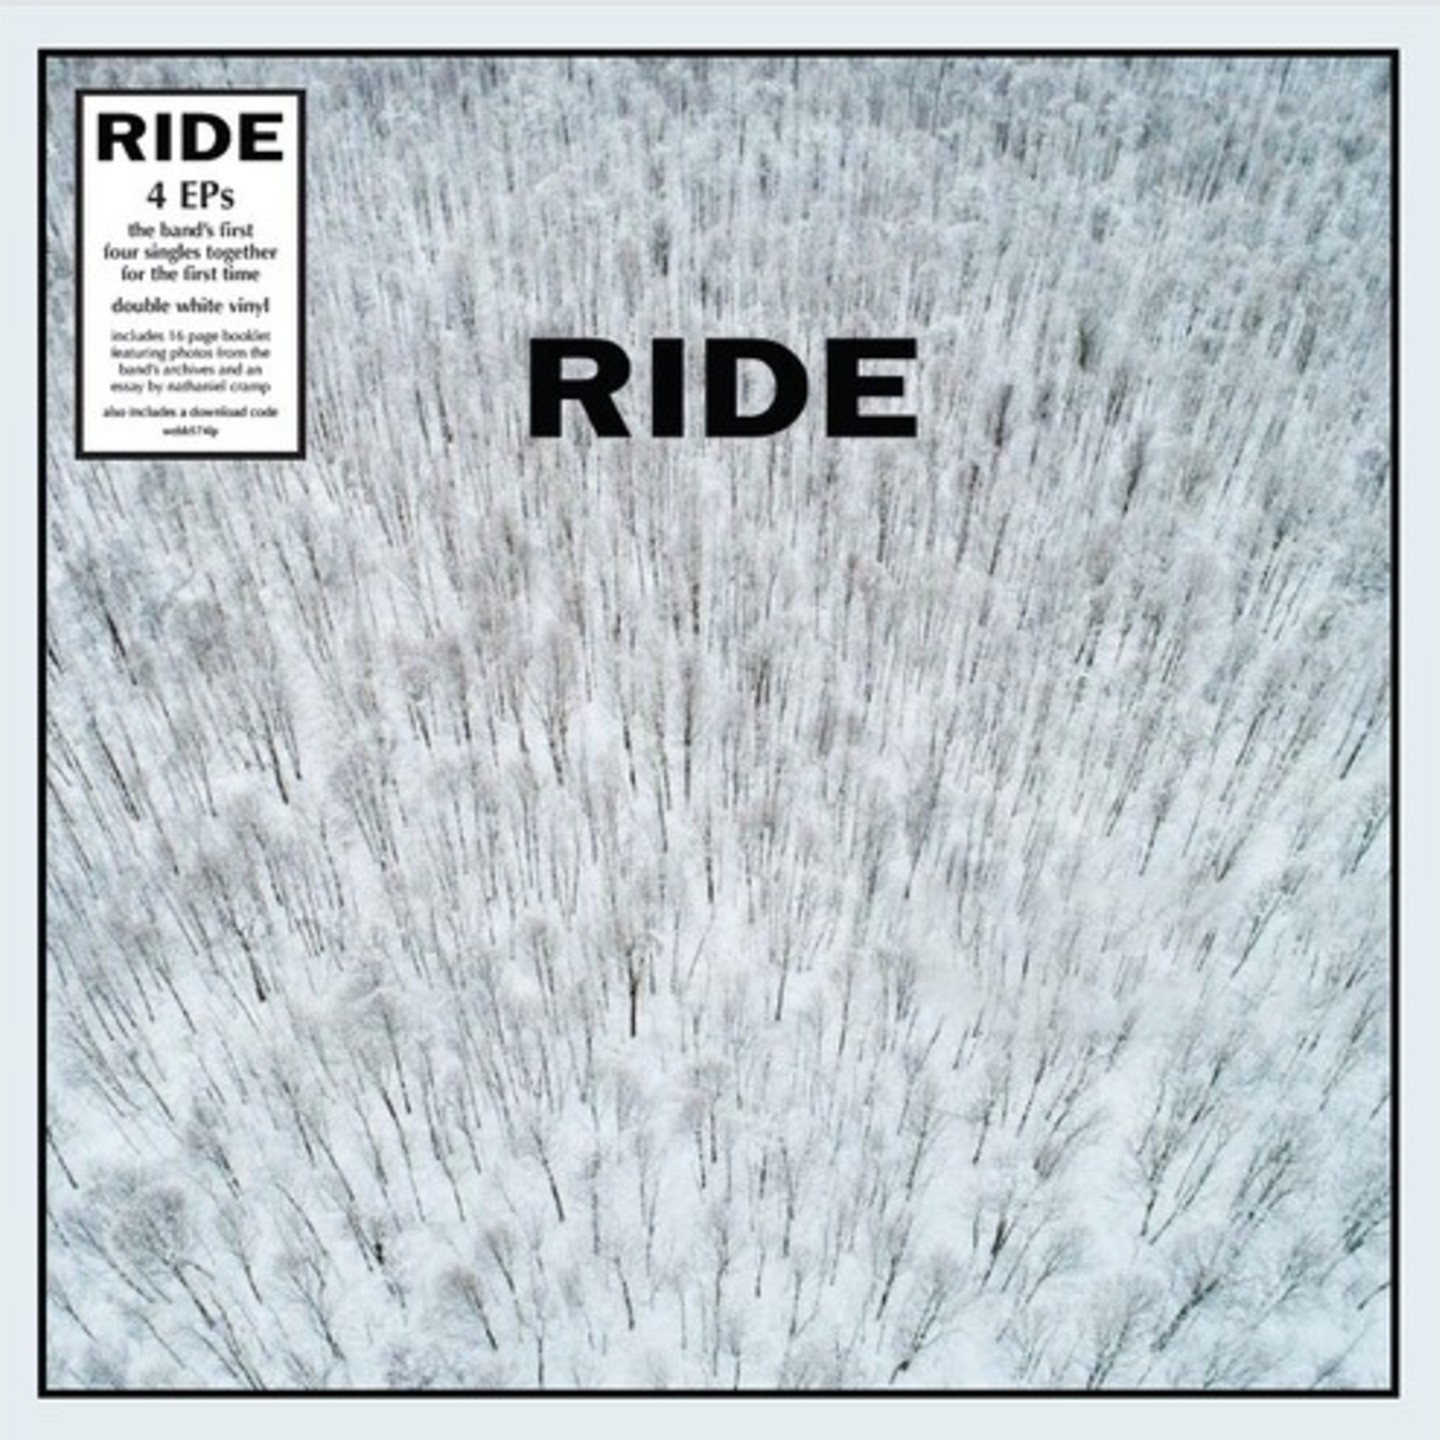 RIDE - 4 EPs 2xLP White vinyl